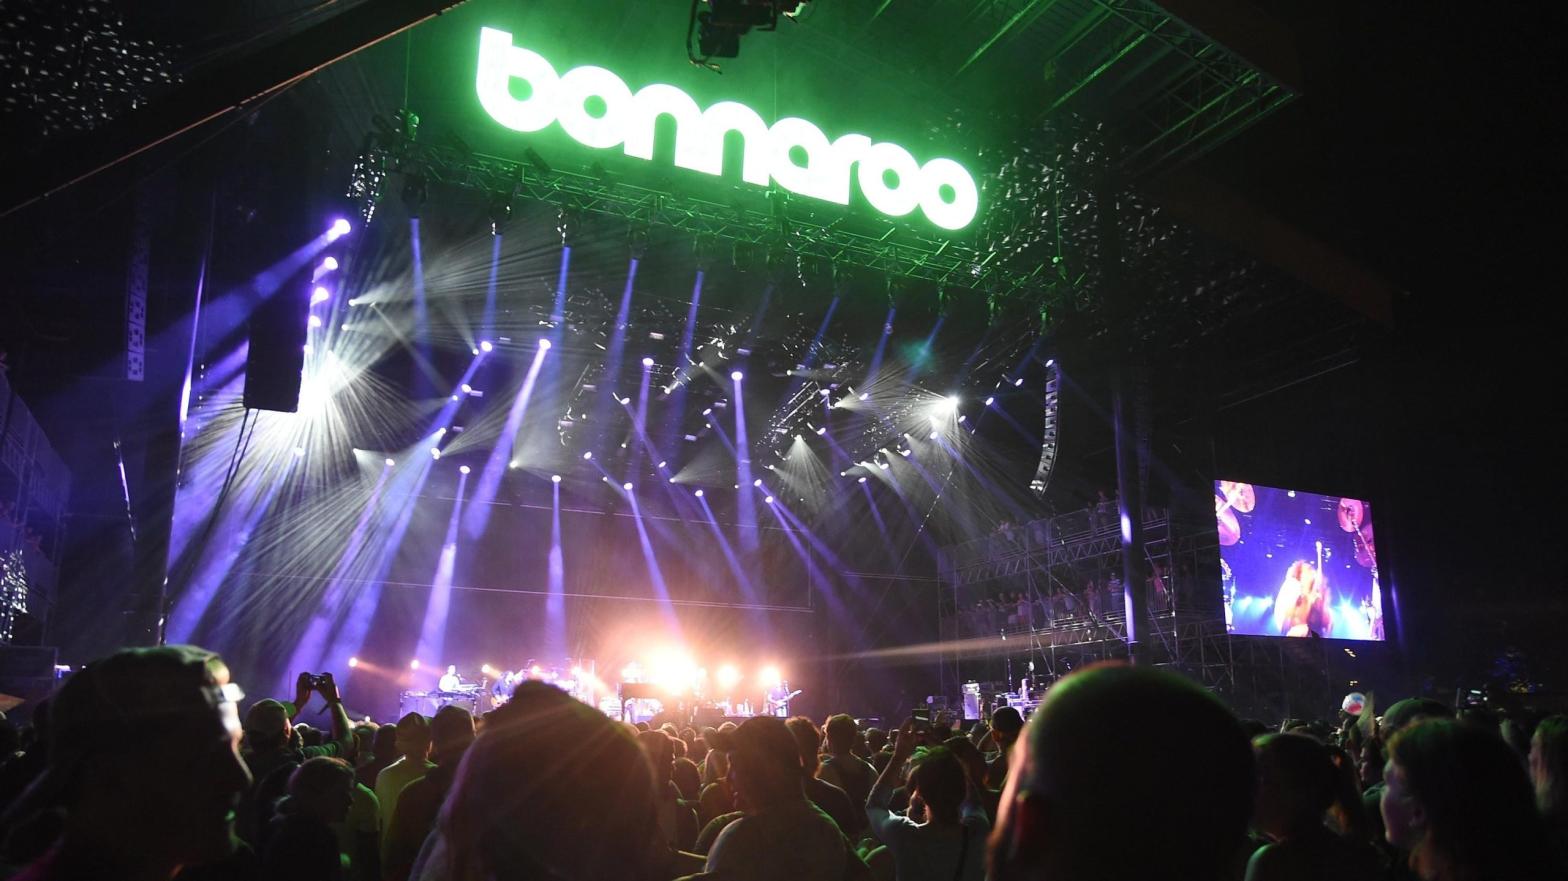 The Bonnaroo music festival in 2015. (Photo: Jason Merritt, Getty Images)